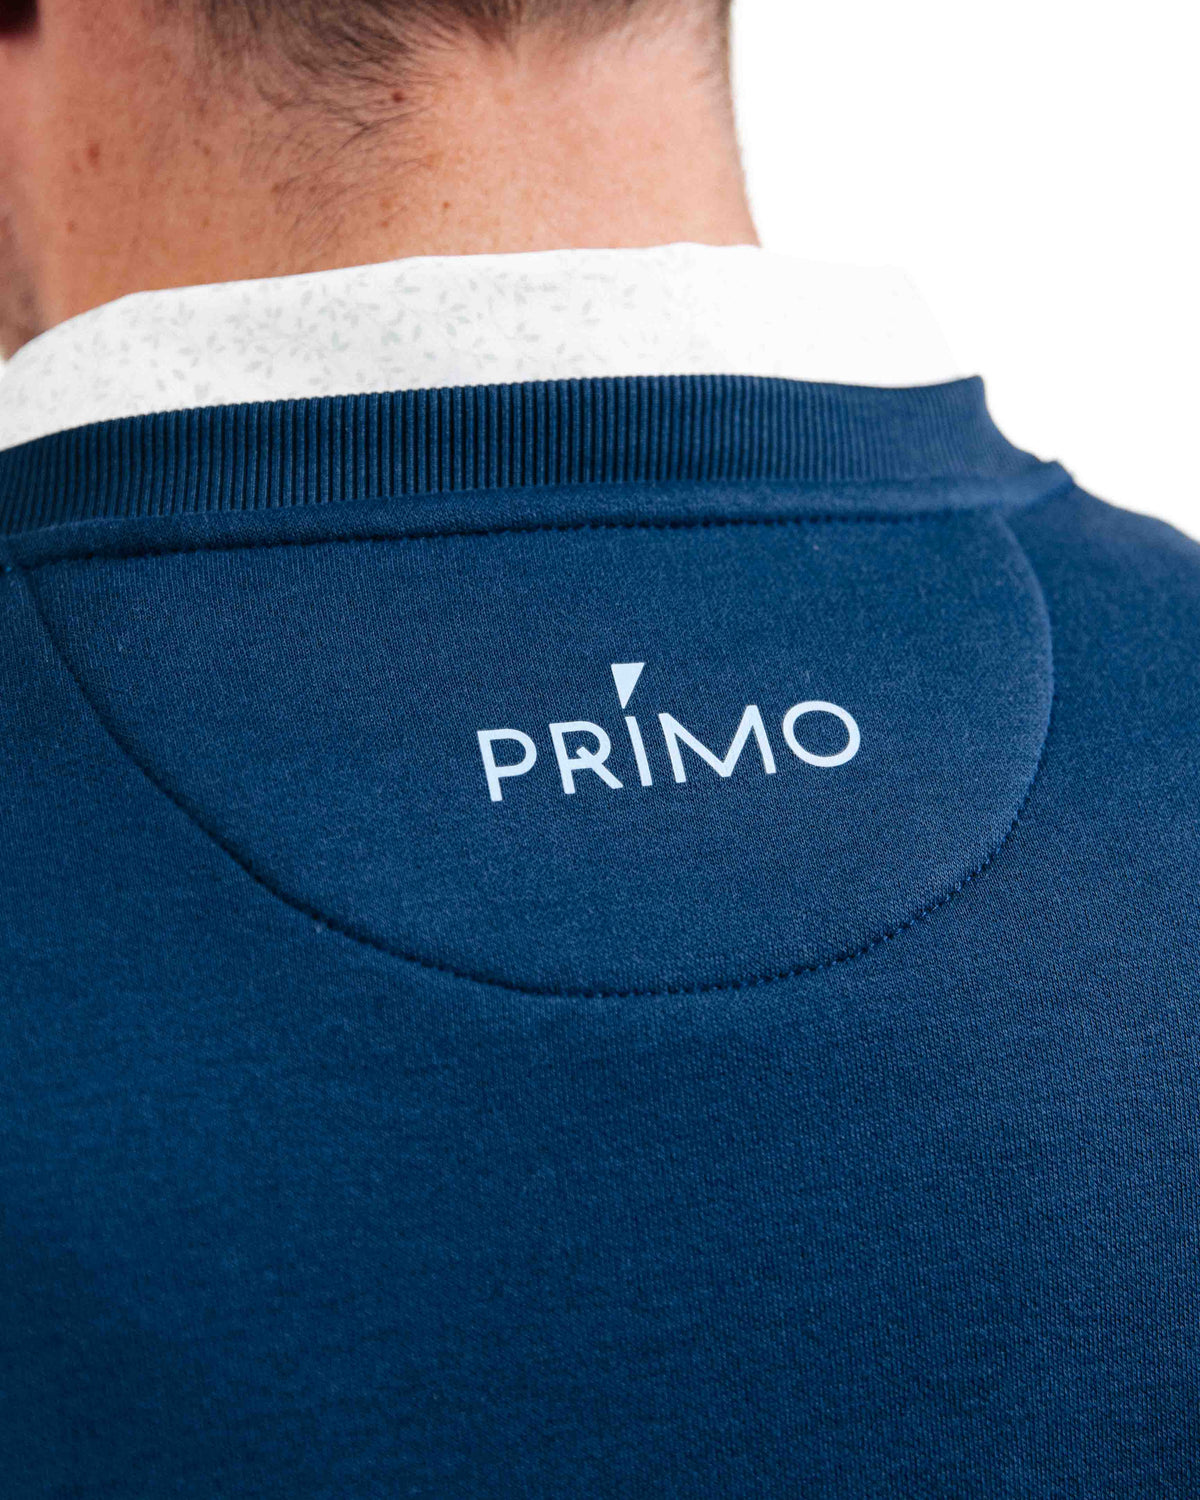 Grant Horvat Crew Neck Sweater Primo wordmark on back neck